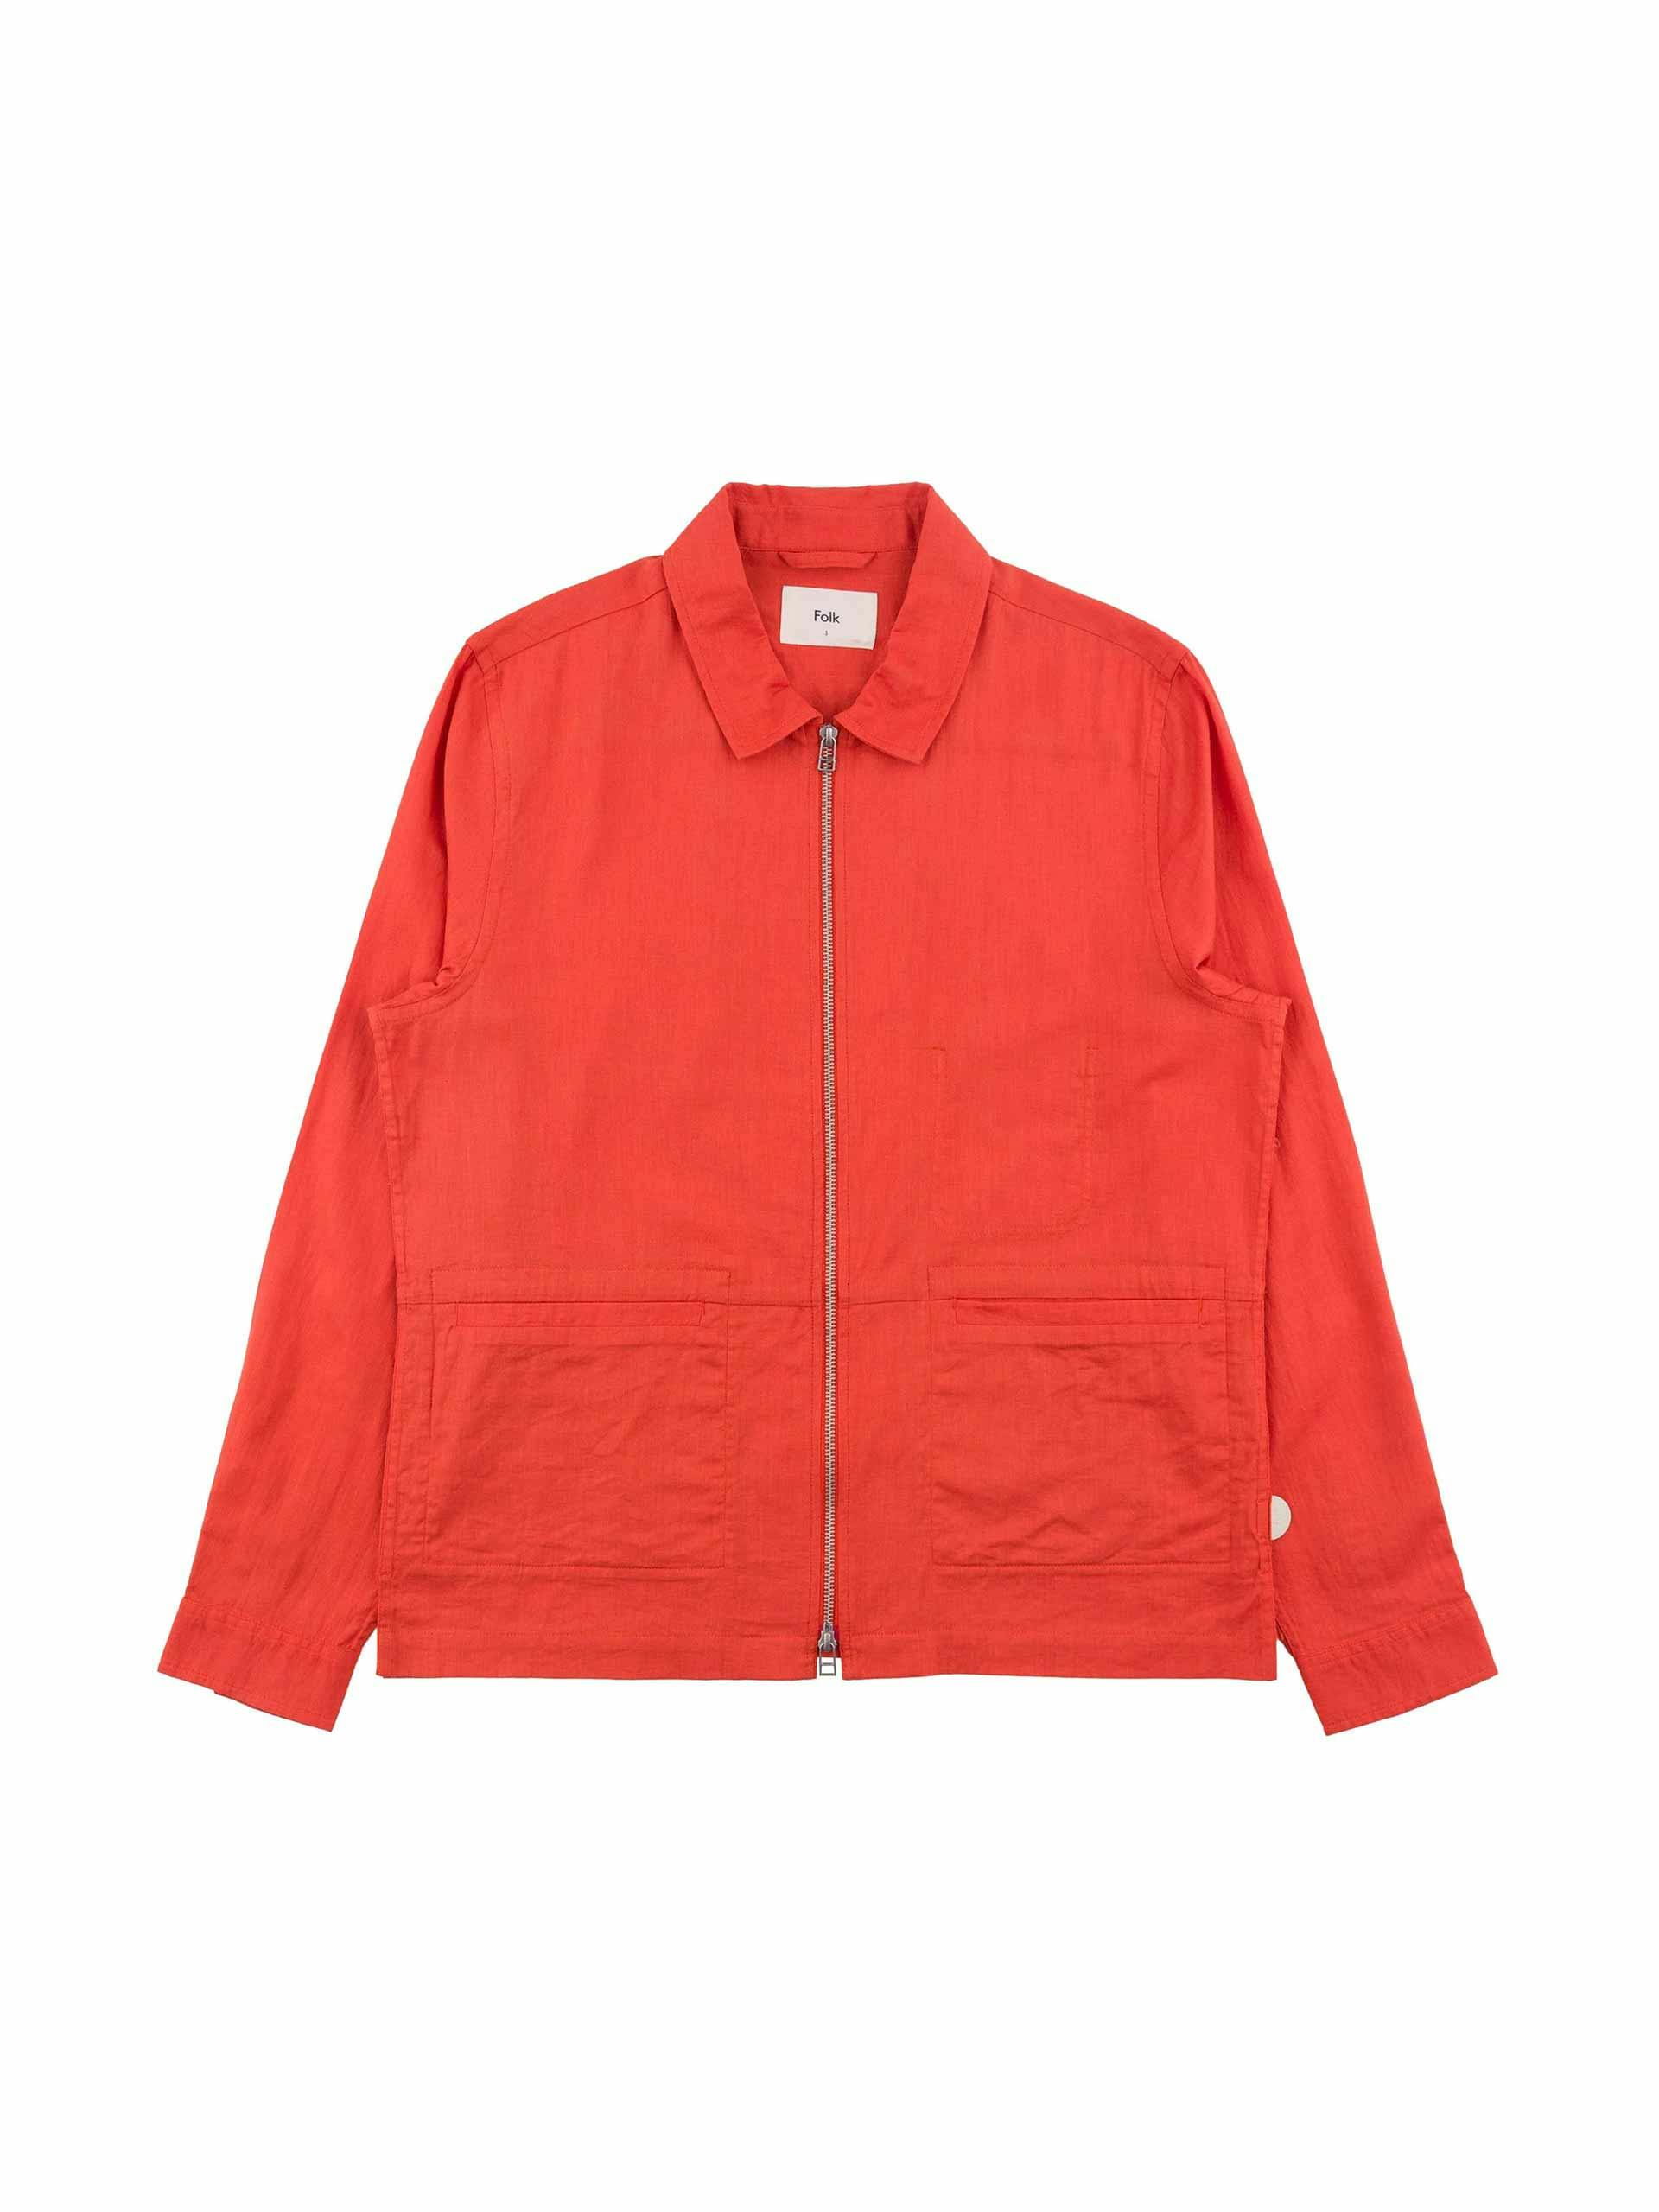 Red zip shirt jacket